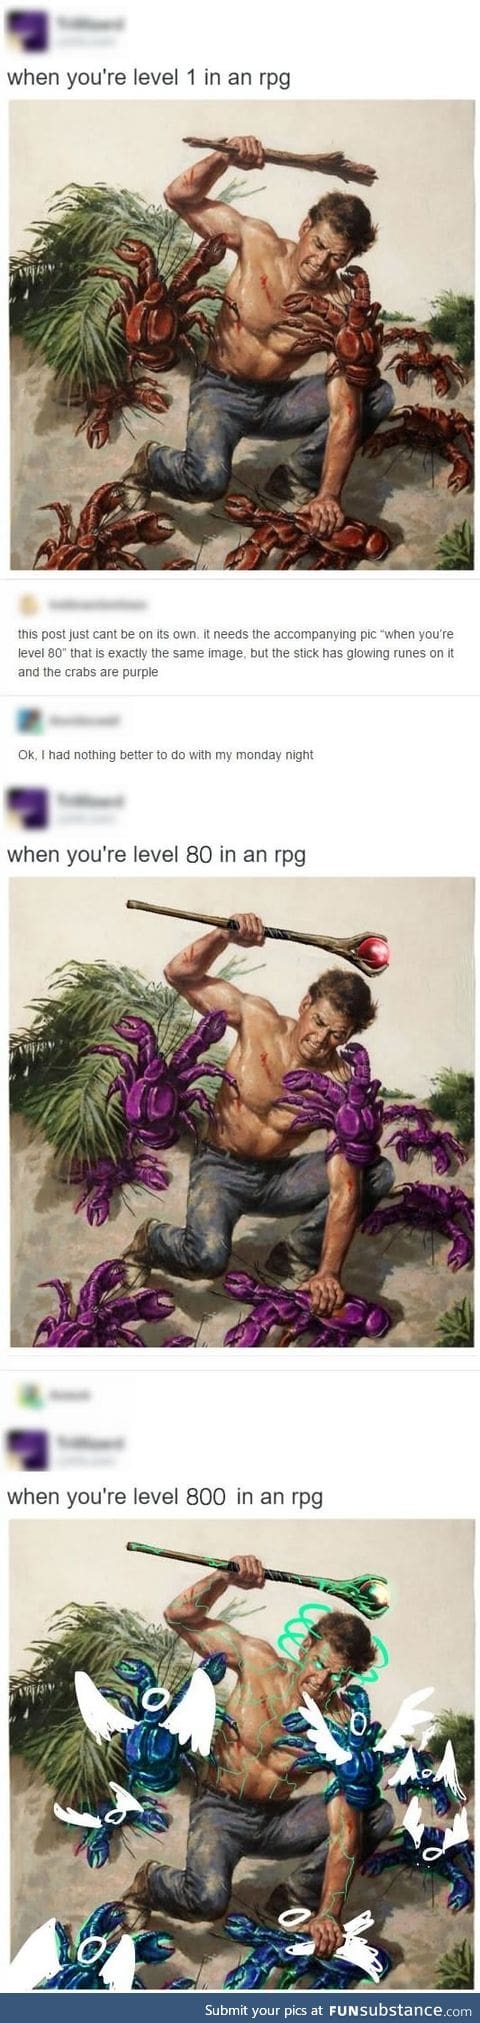 RPG leveling